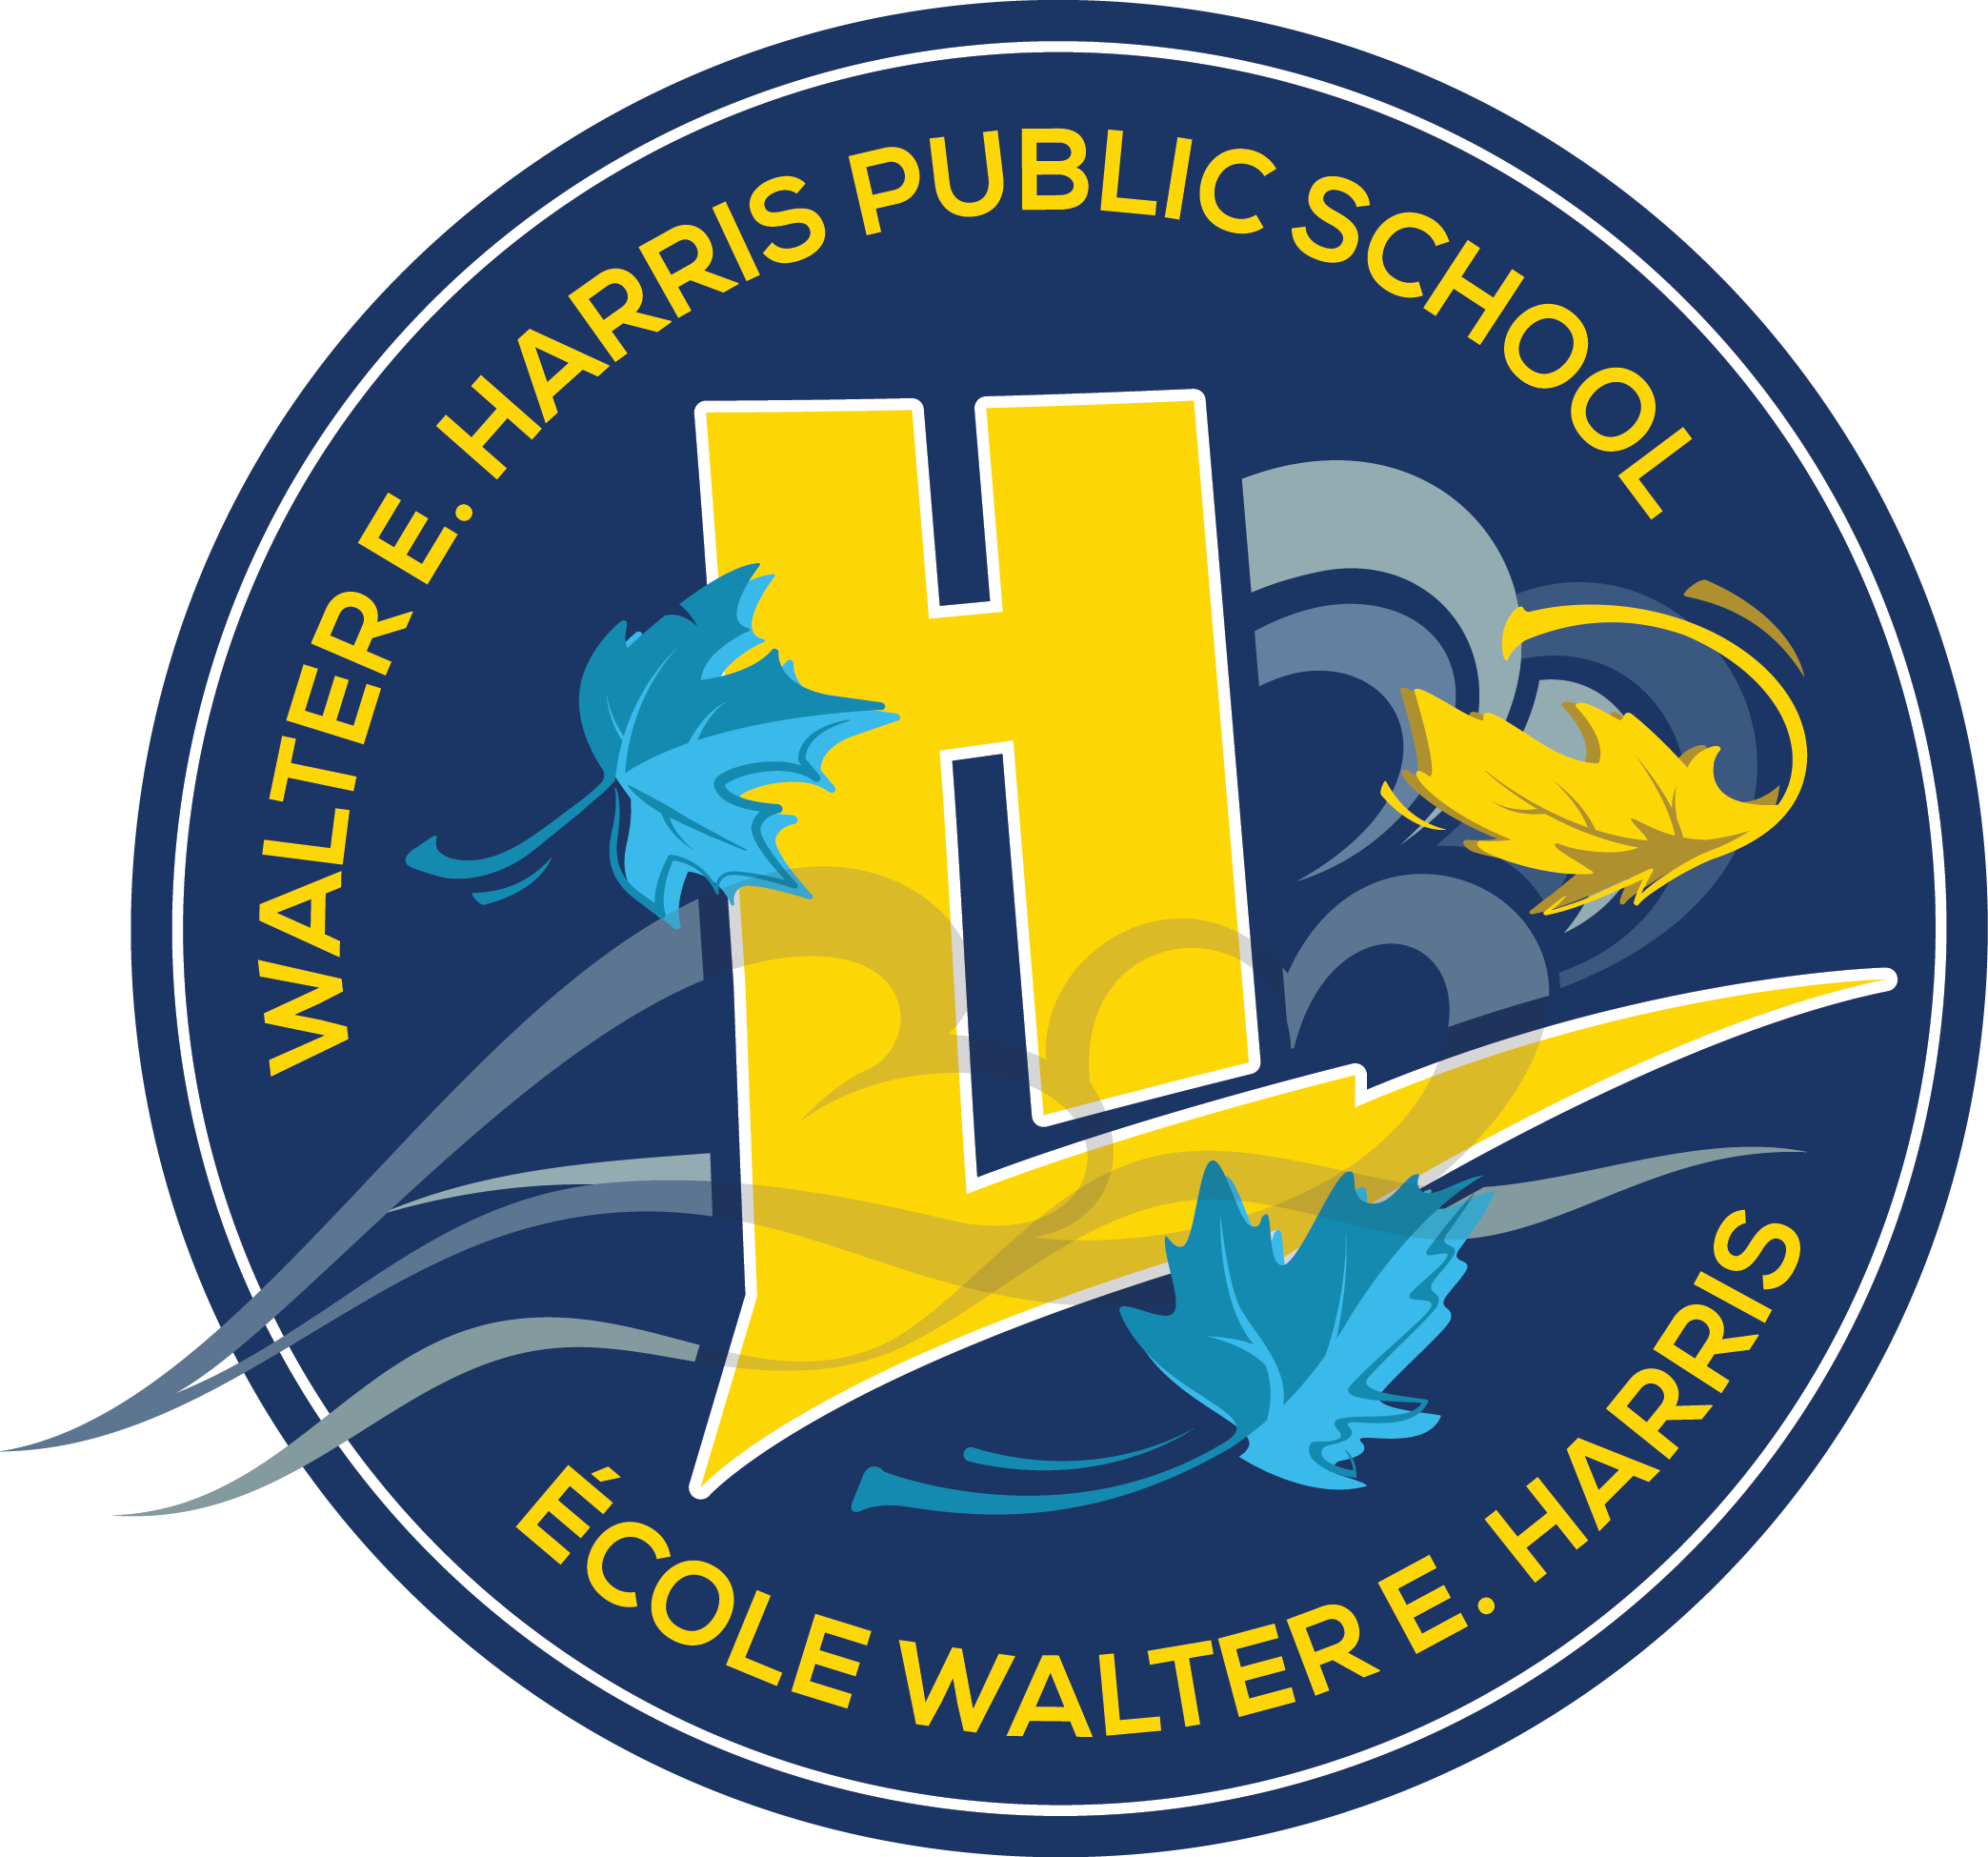 Walter E. Harris Public School logo